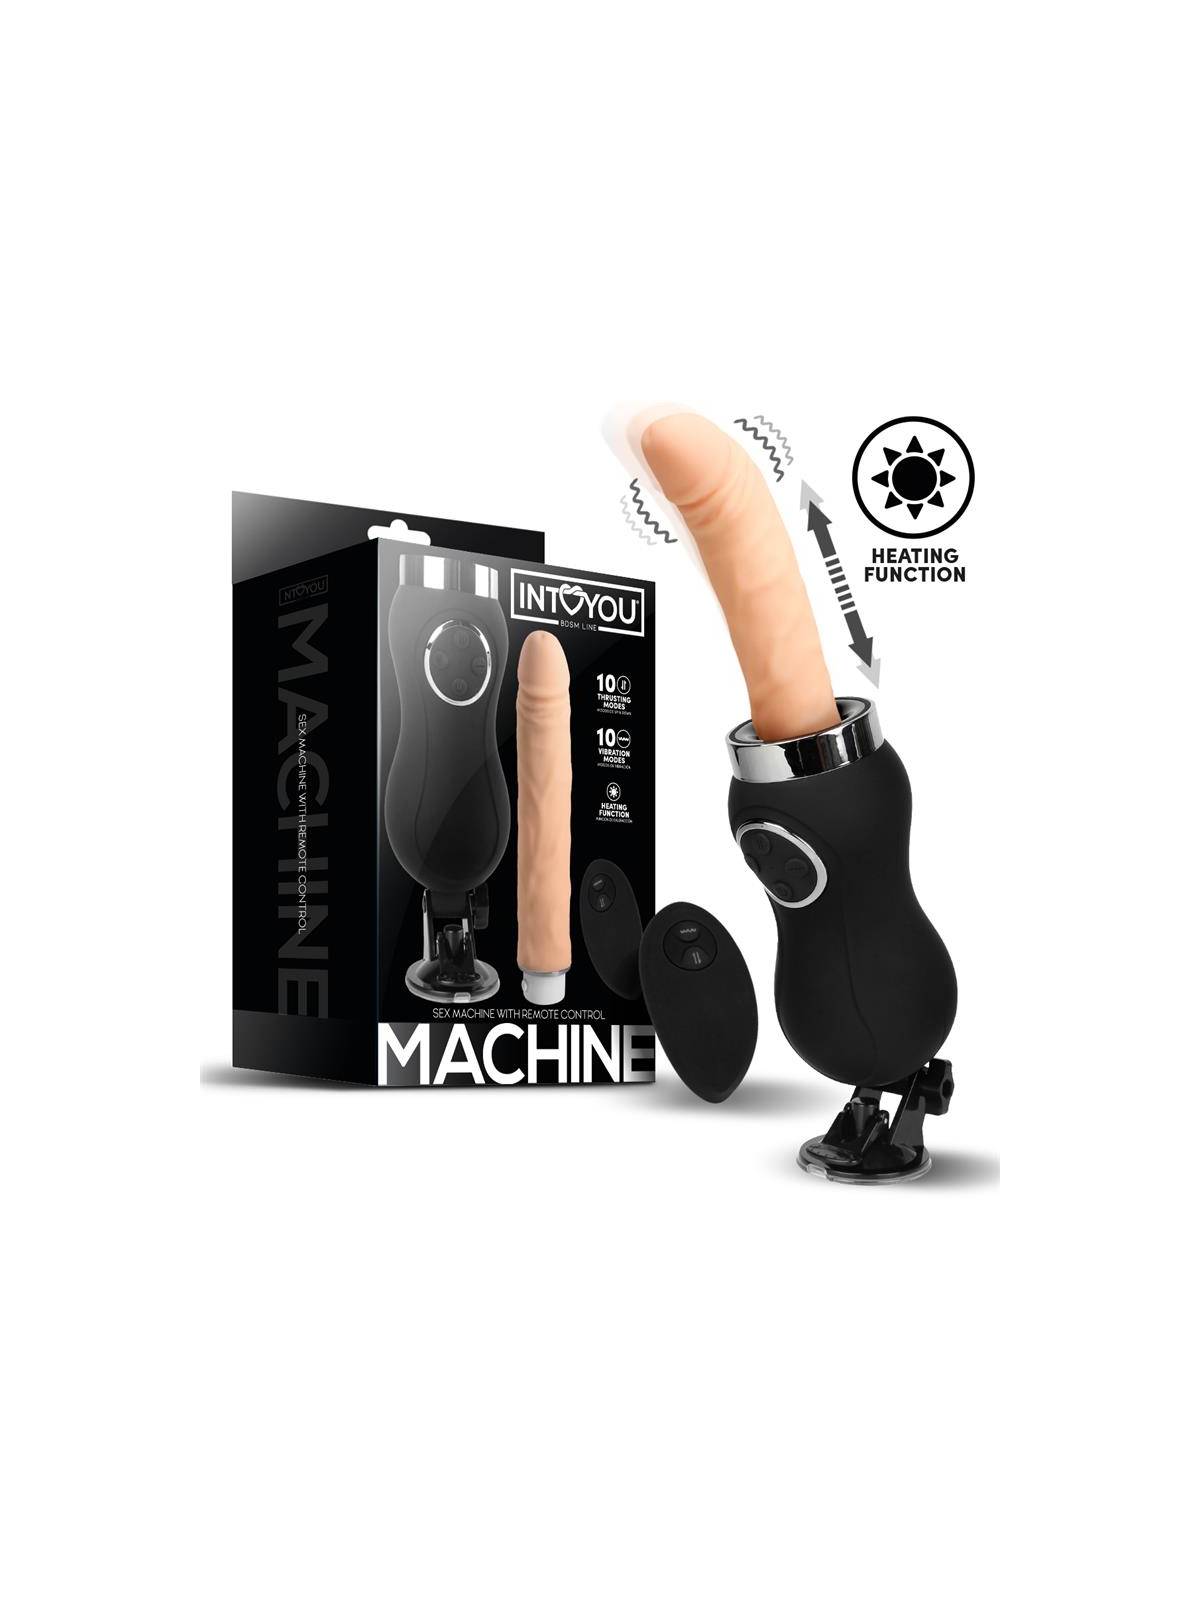 Sex Machine Vibracion Thrusting y Calor Control Remoto USB